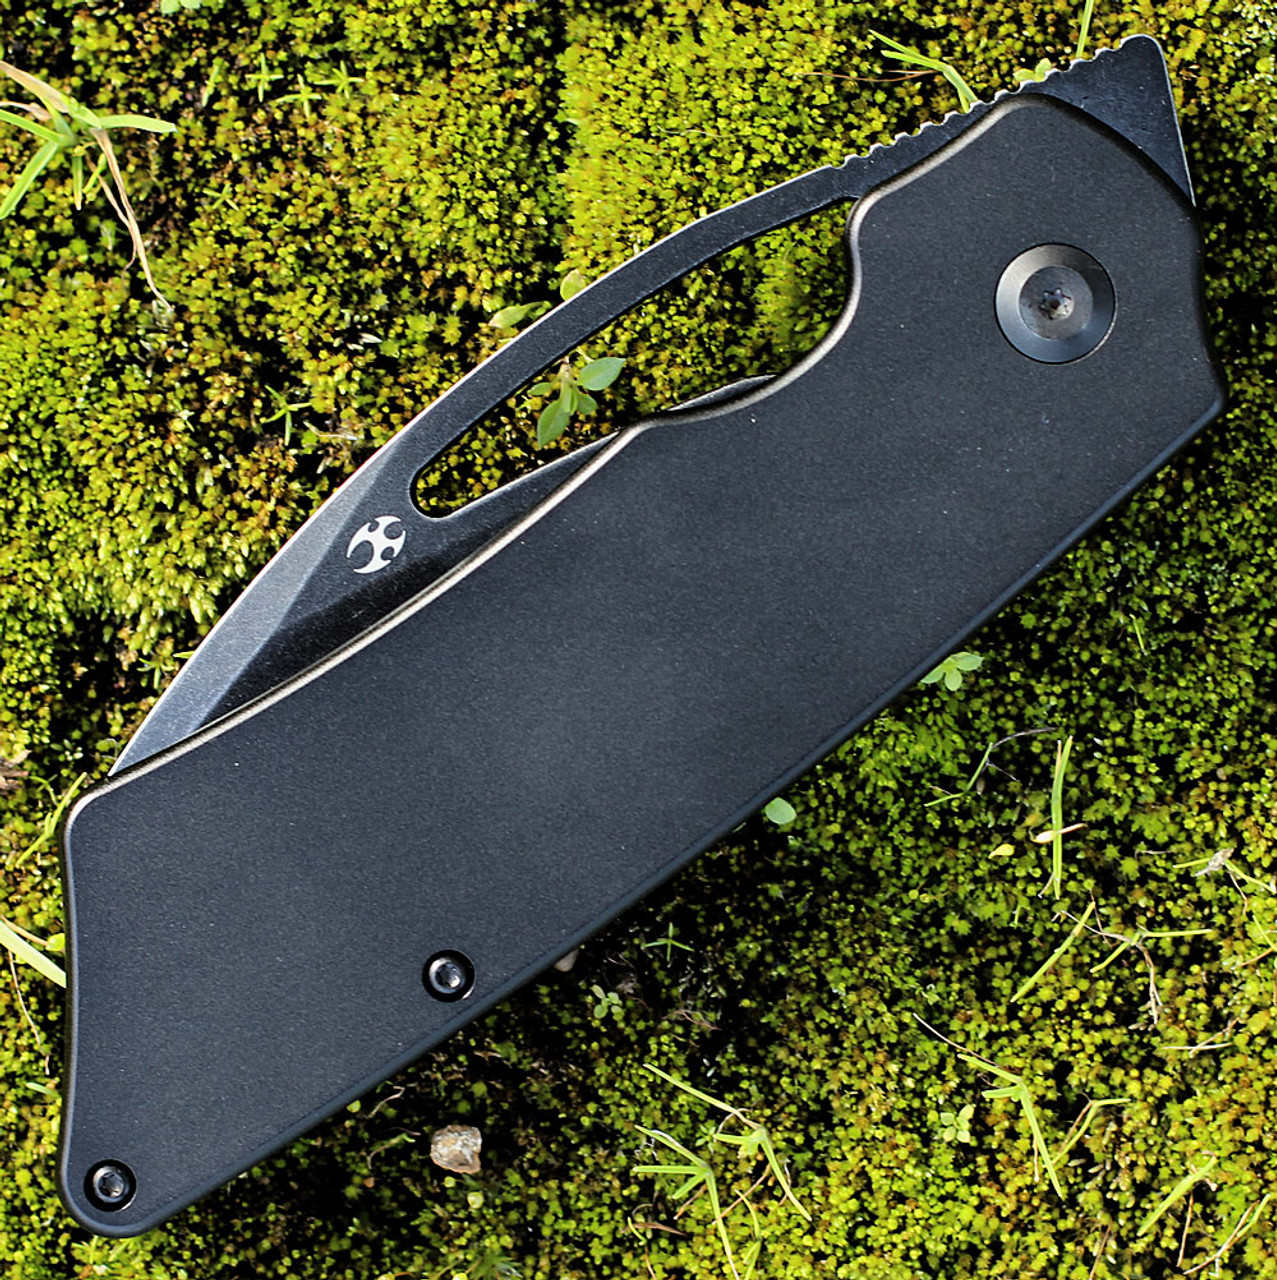 Kansept Goblin XL (K1016A2) - 3.50" CPM-S35VN Black TiCn Stonewashed Tanto Plain Blade, Black Anodized Titanium Handle